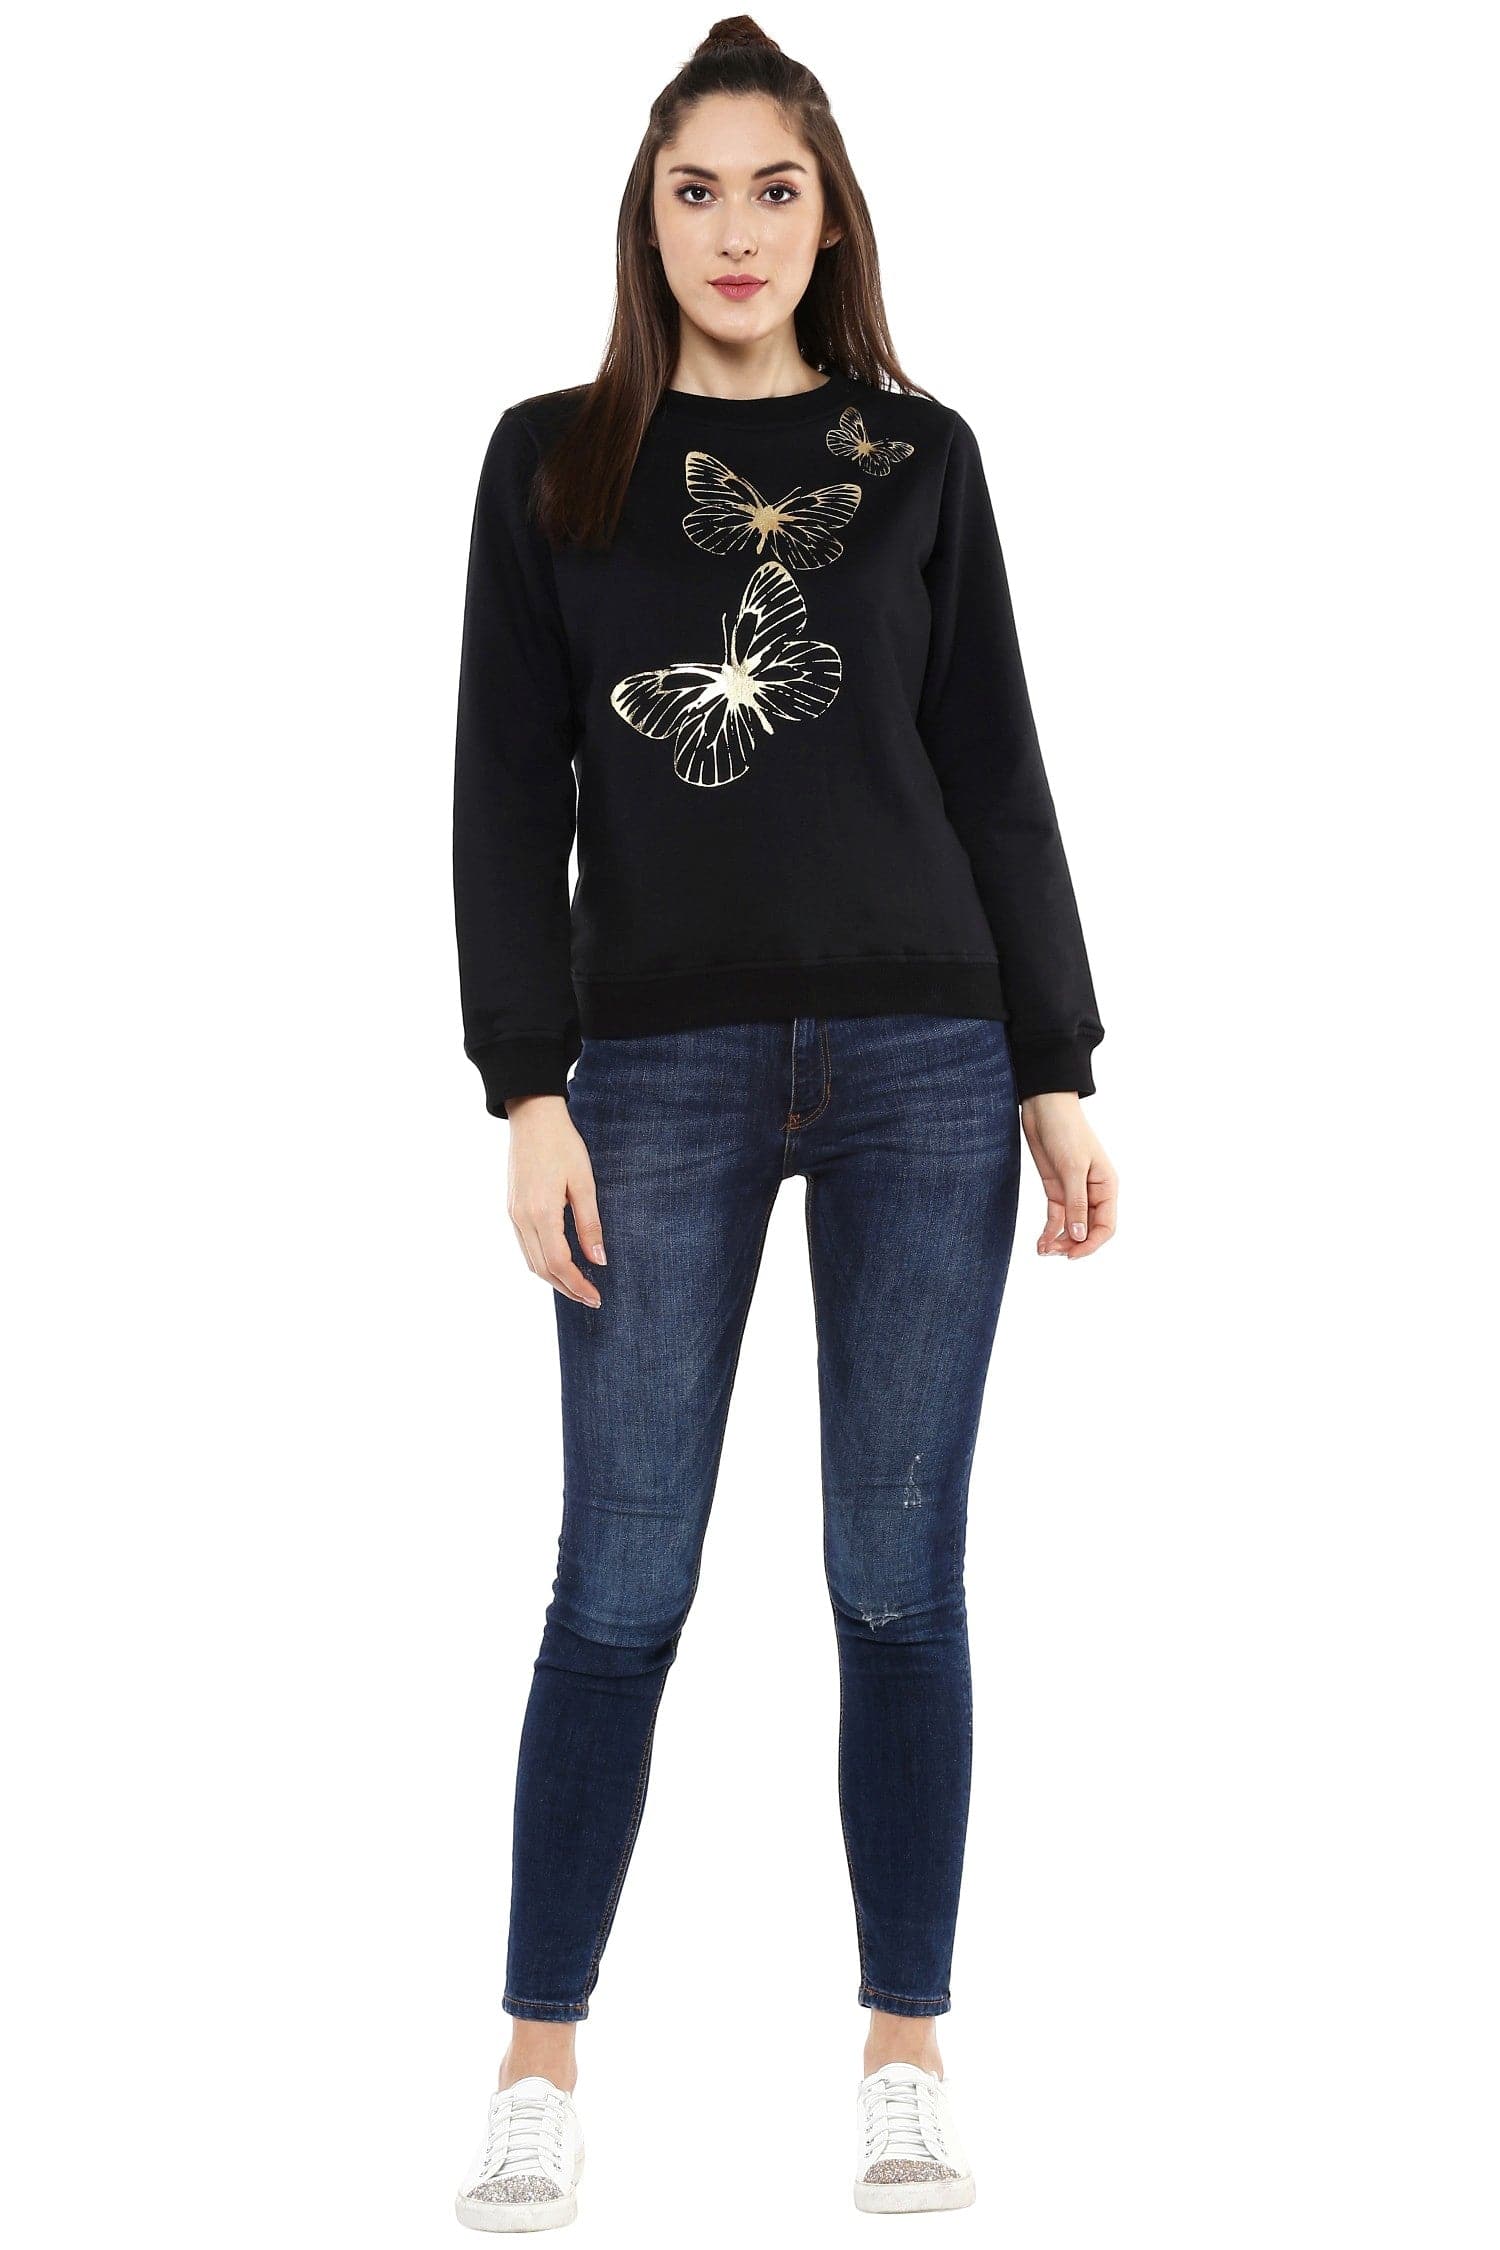 Black Sweatshirt with Foil Print-Sweatshirts-SASSAFRAS